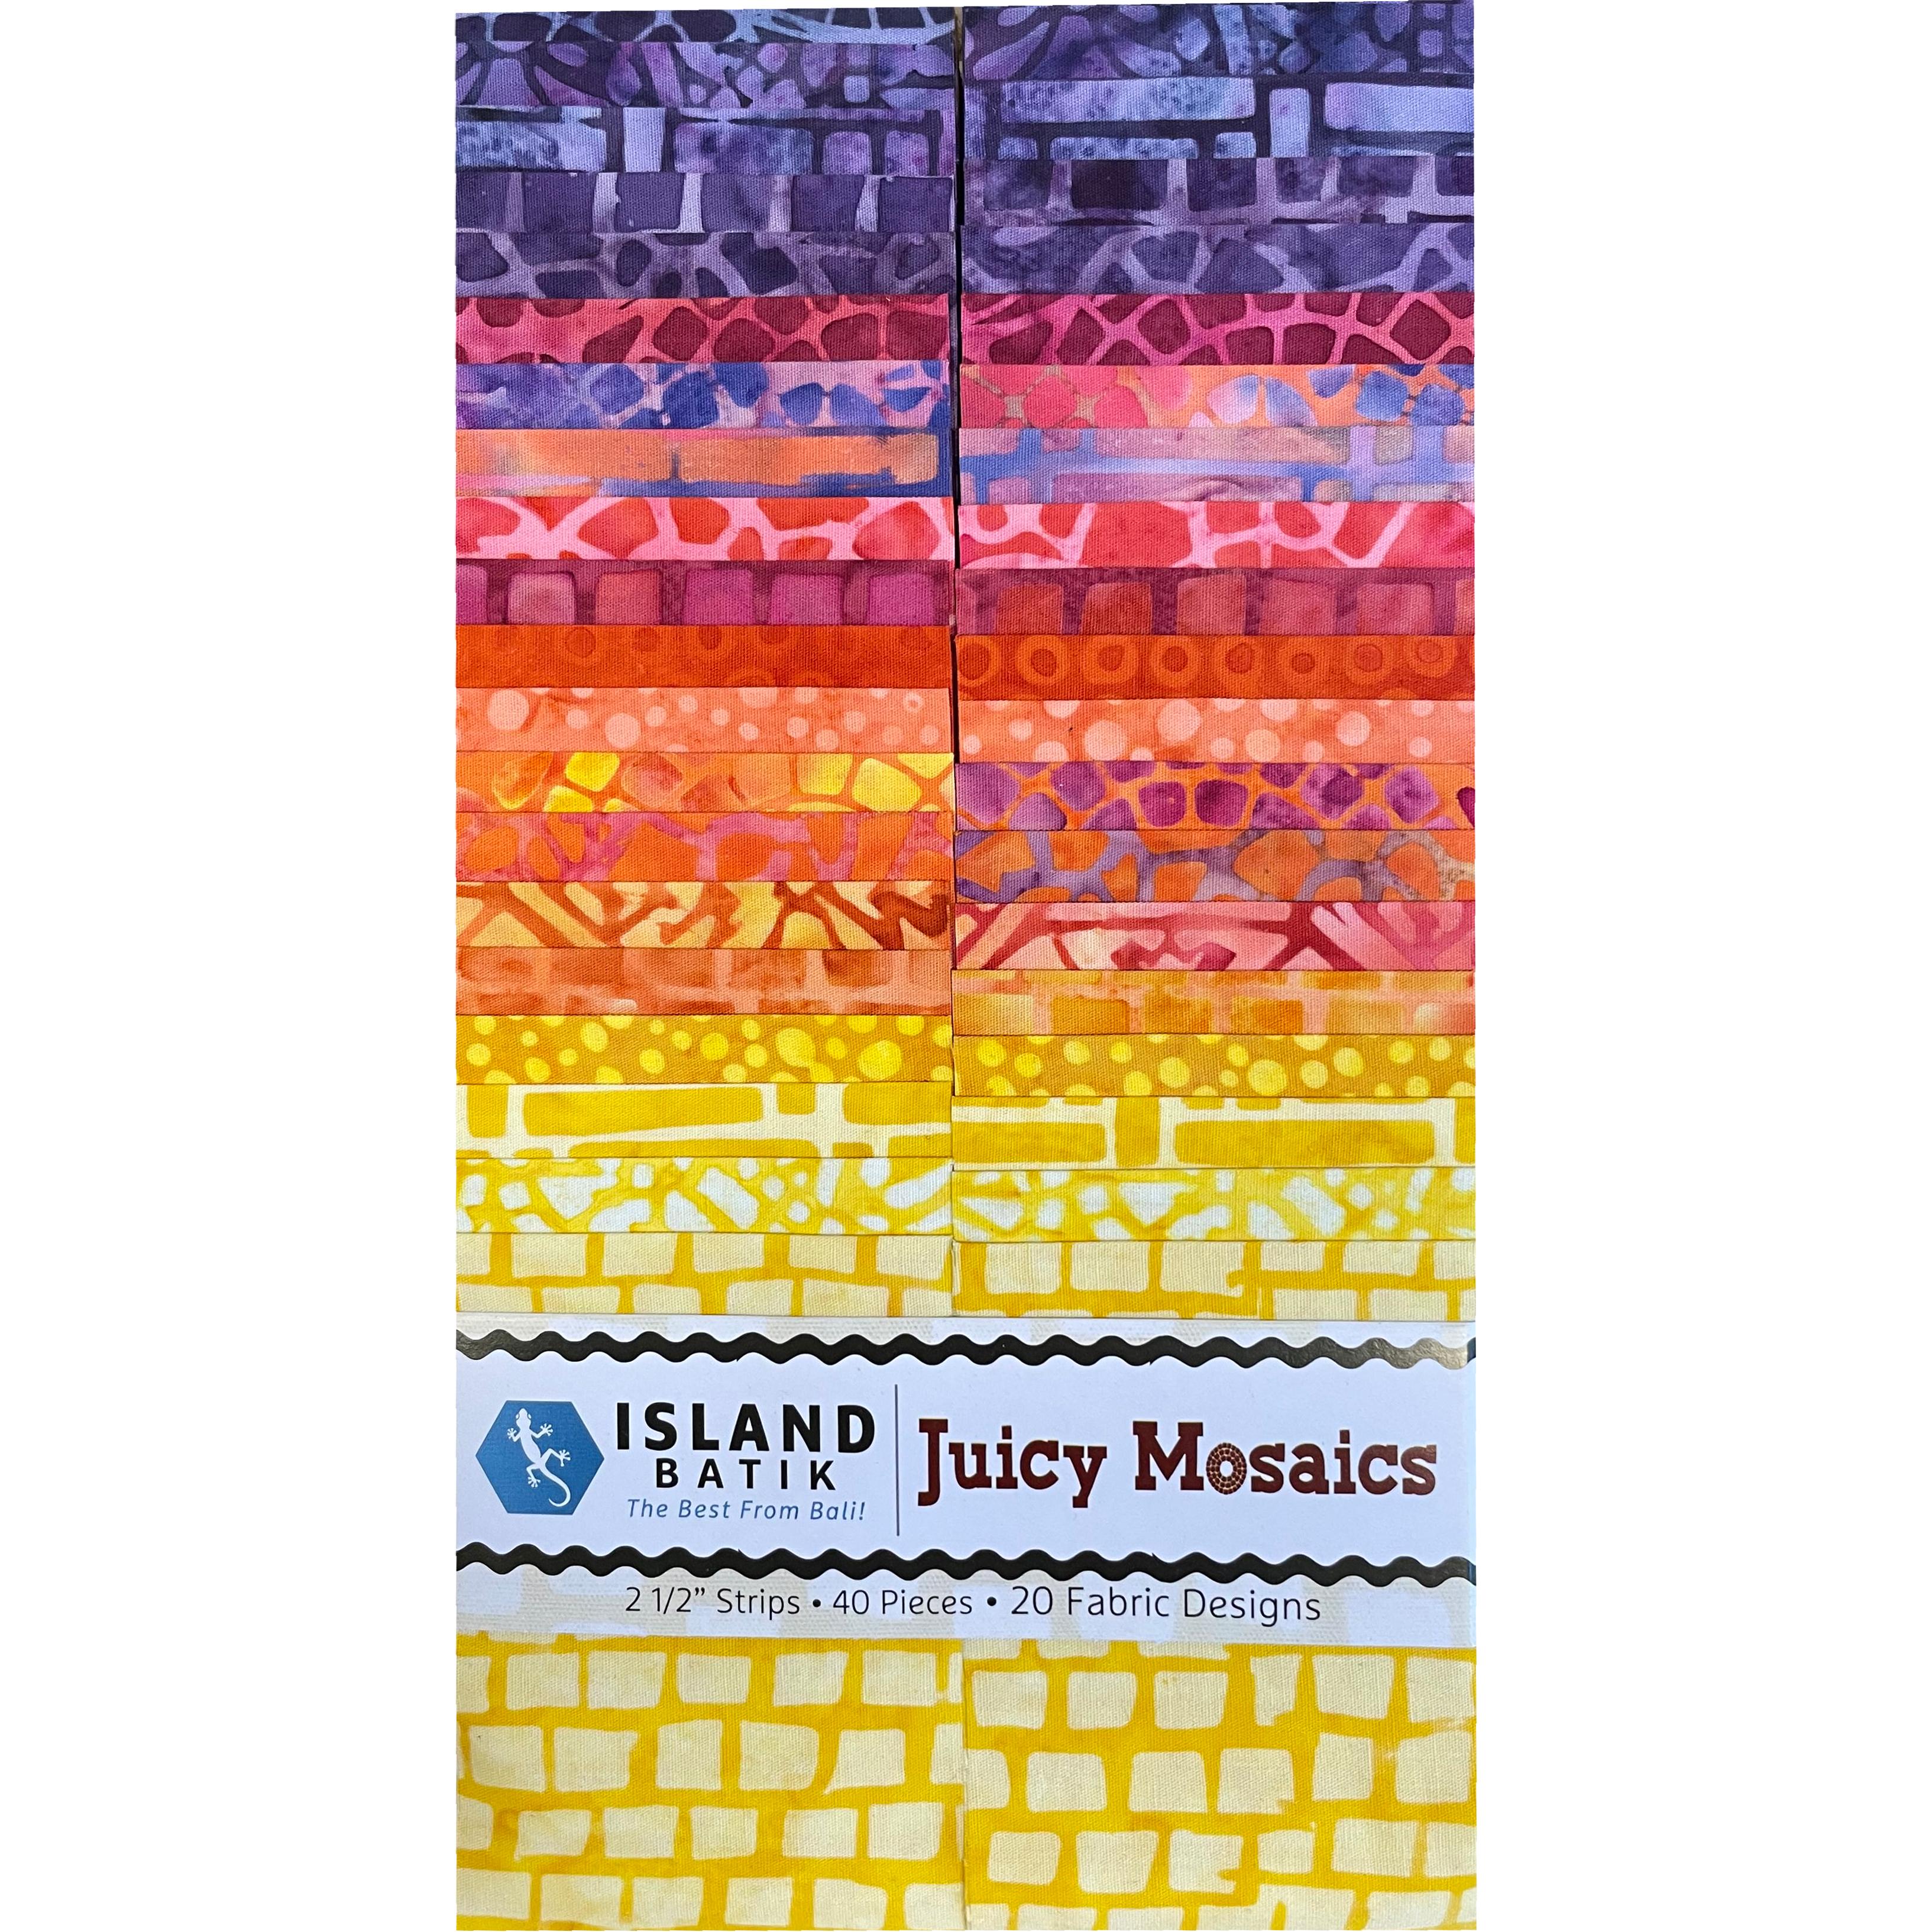 Juicy Mosaics Batik 2½" Strip Set